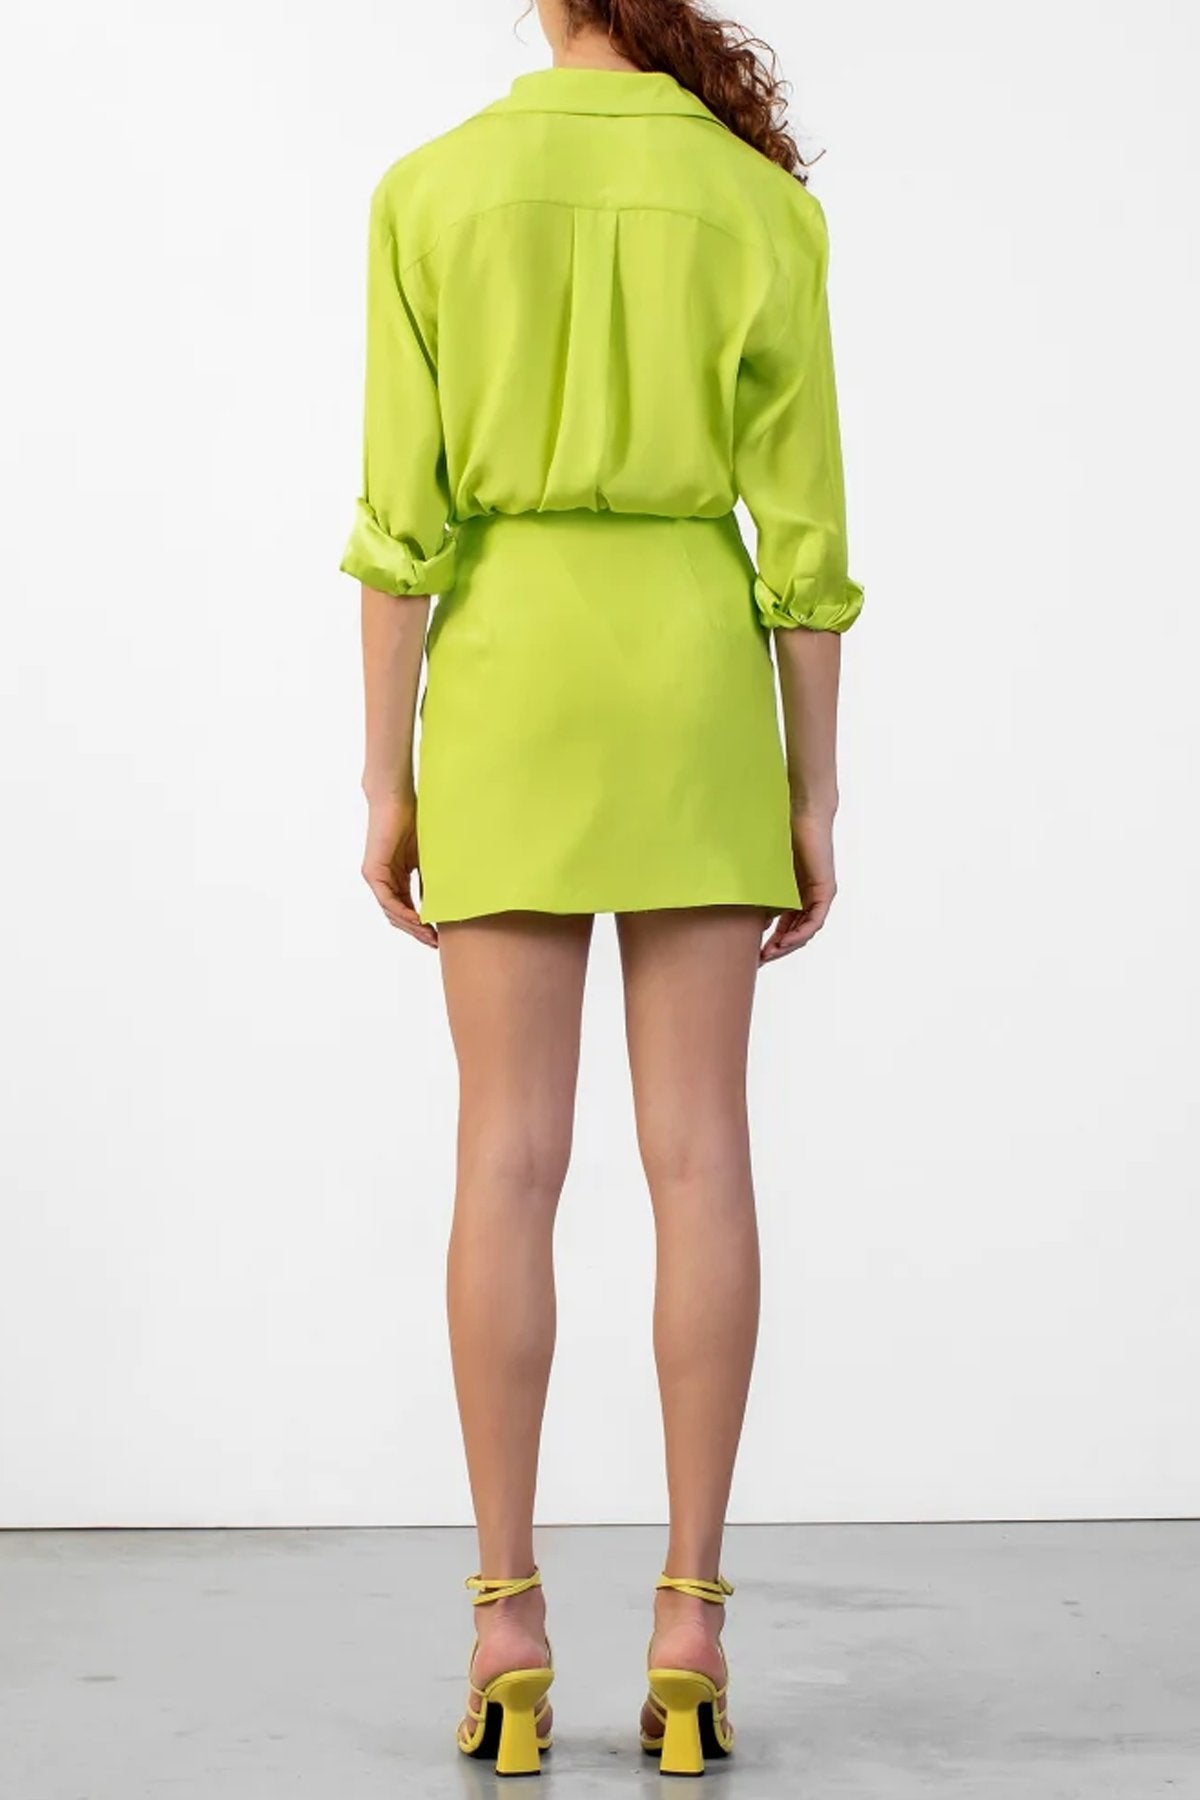 Naha Short Dress in Bright Green - shop-olivia.com